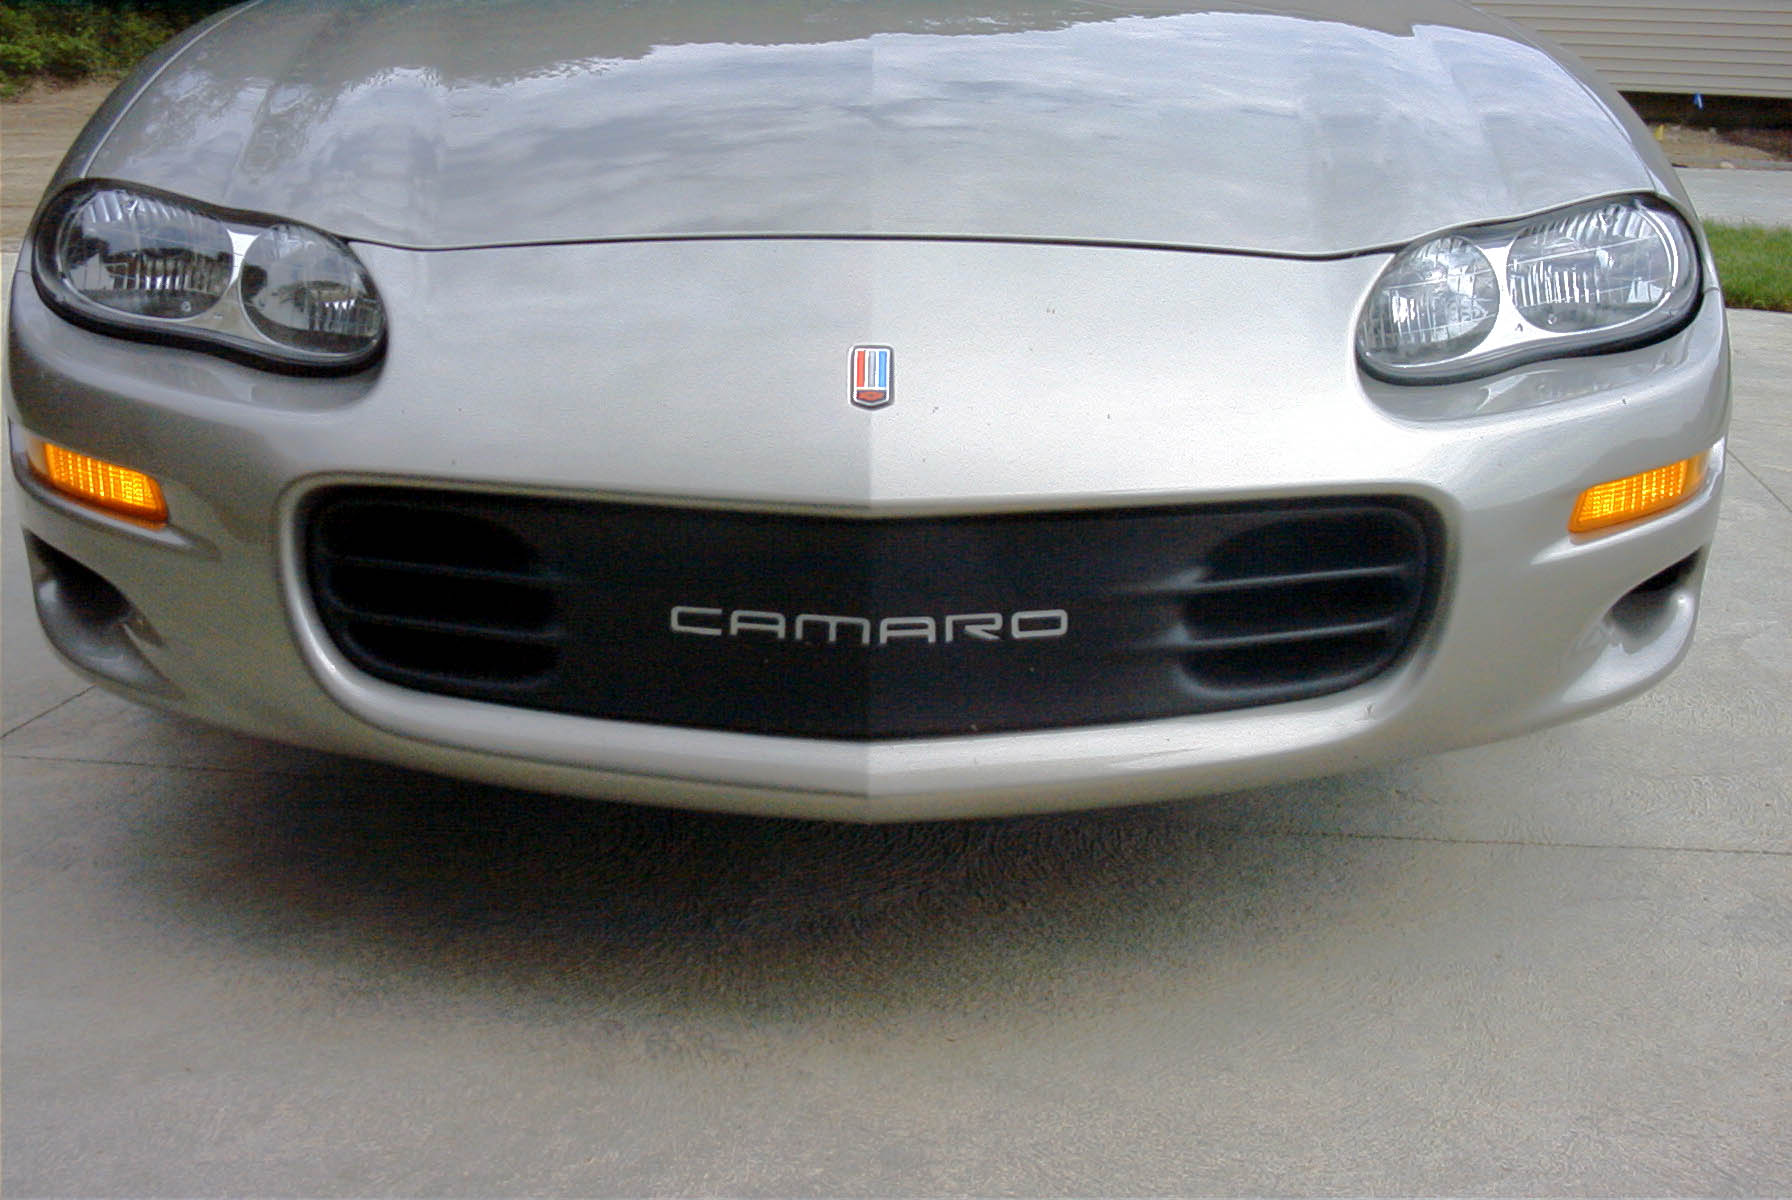 98-02 Camaro Vinyl Decal Front "Camaro" Inserts